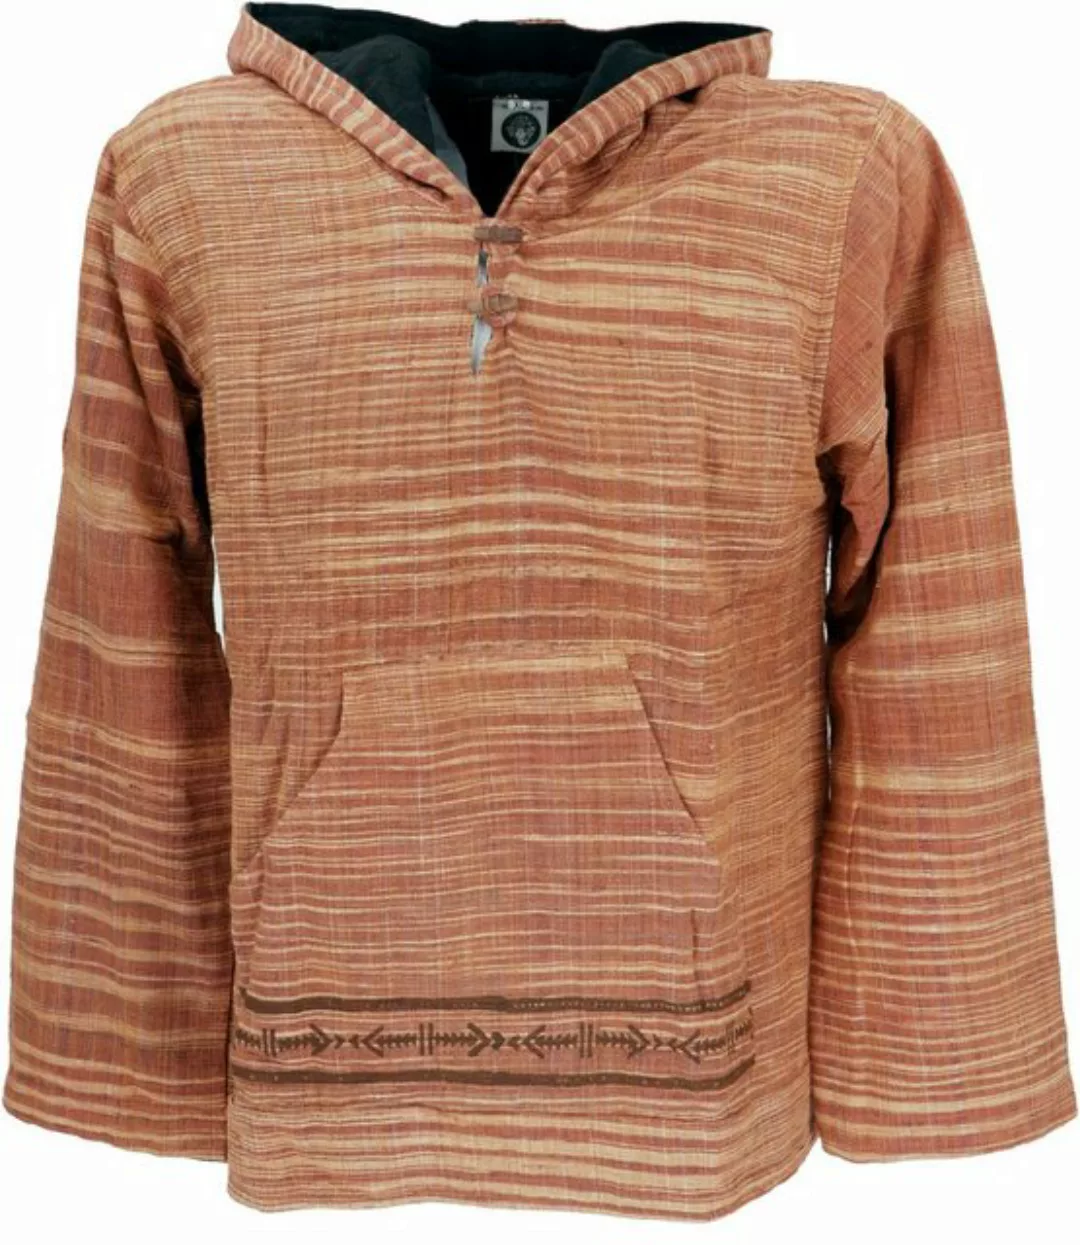 Guru-Shop Sweater Ethno Kadhi Kapuzenshirt, Baja Hoodie - rost alternative günstig online kaufen